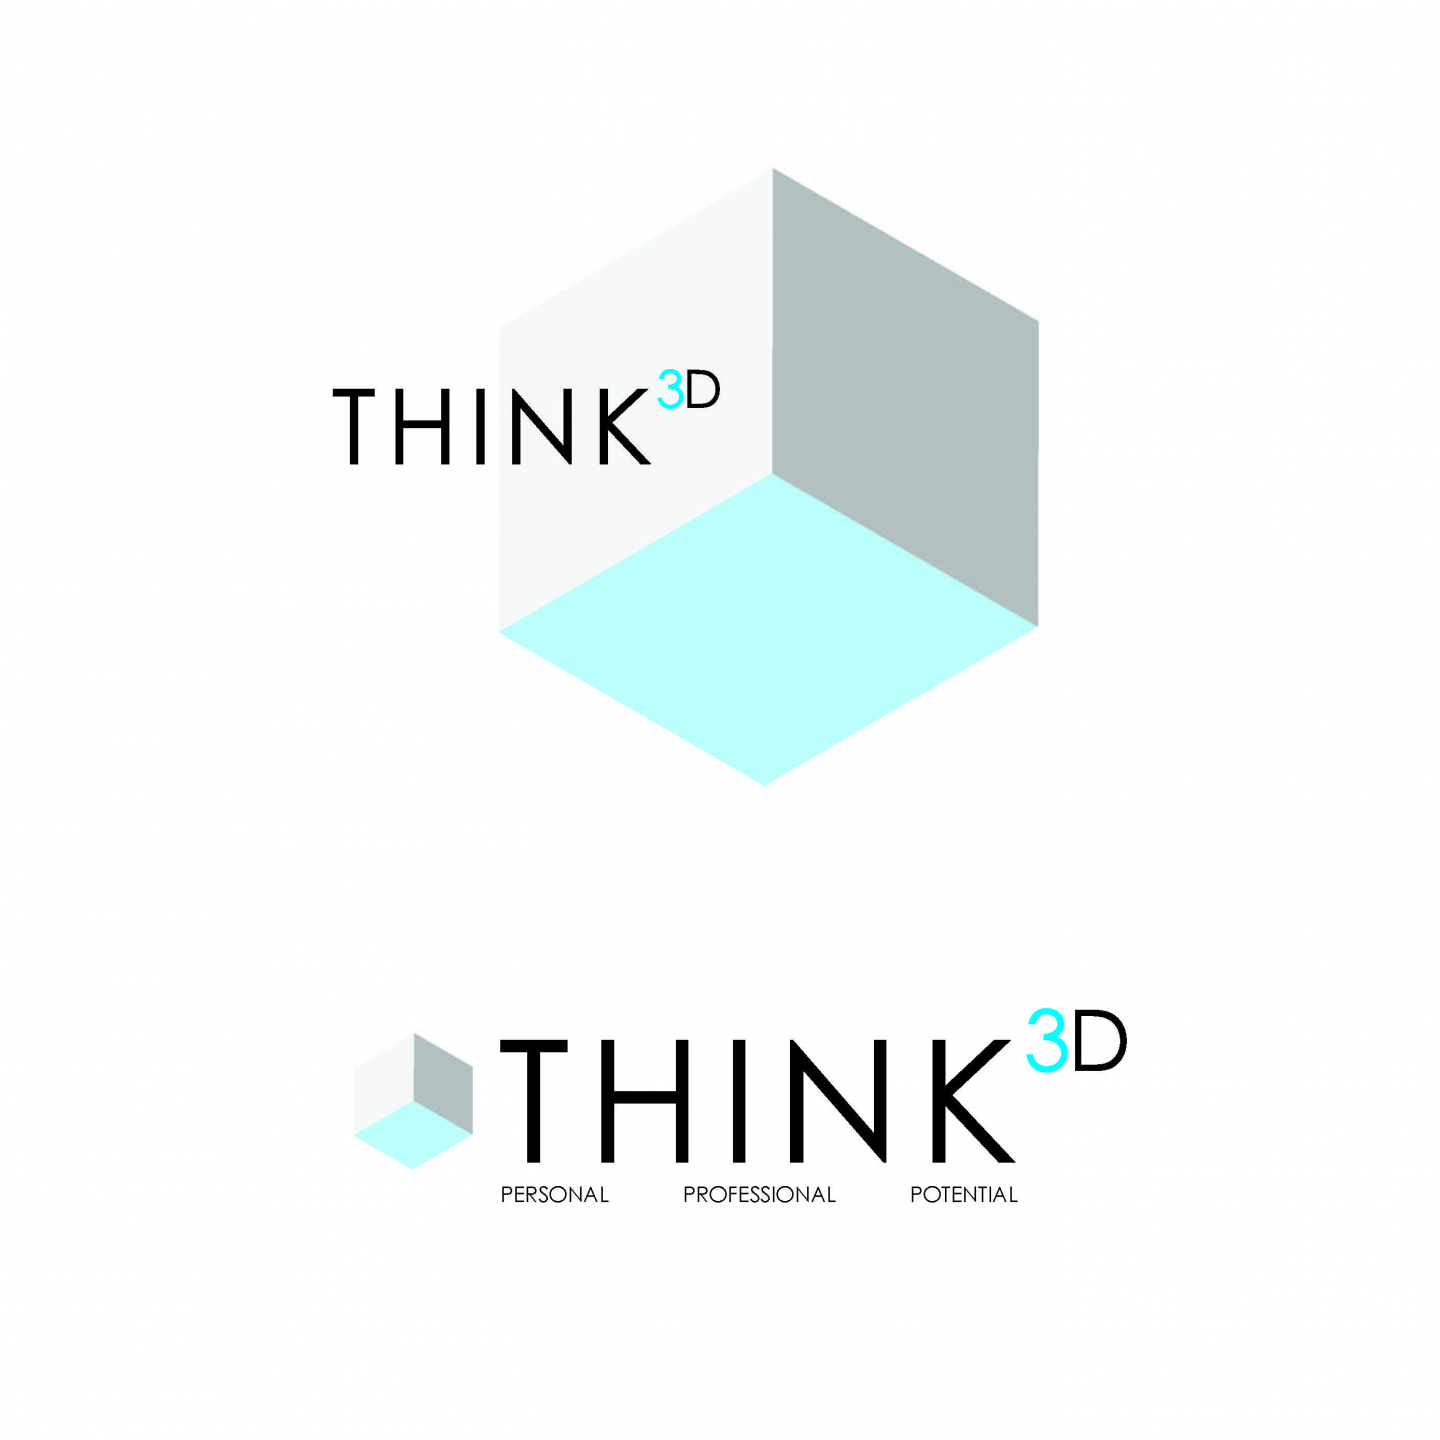 Think 3D